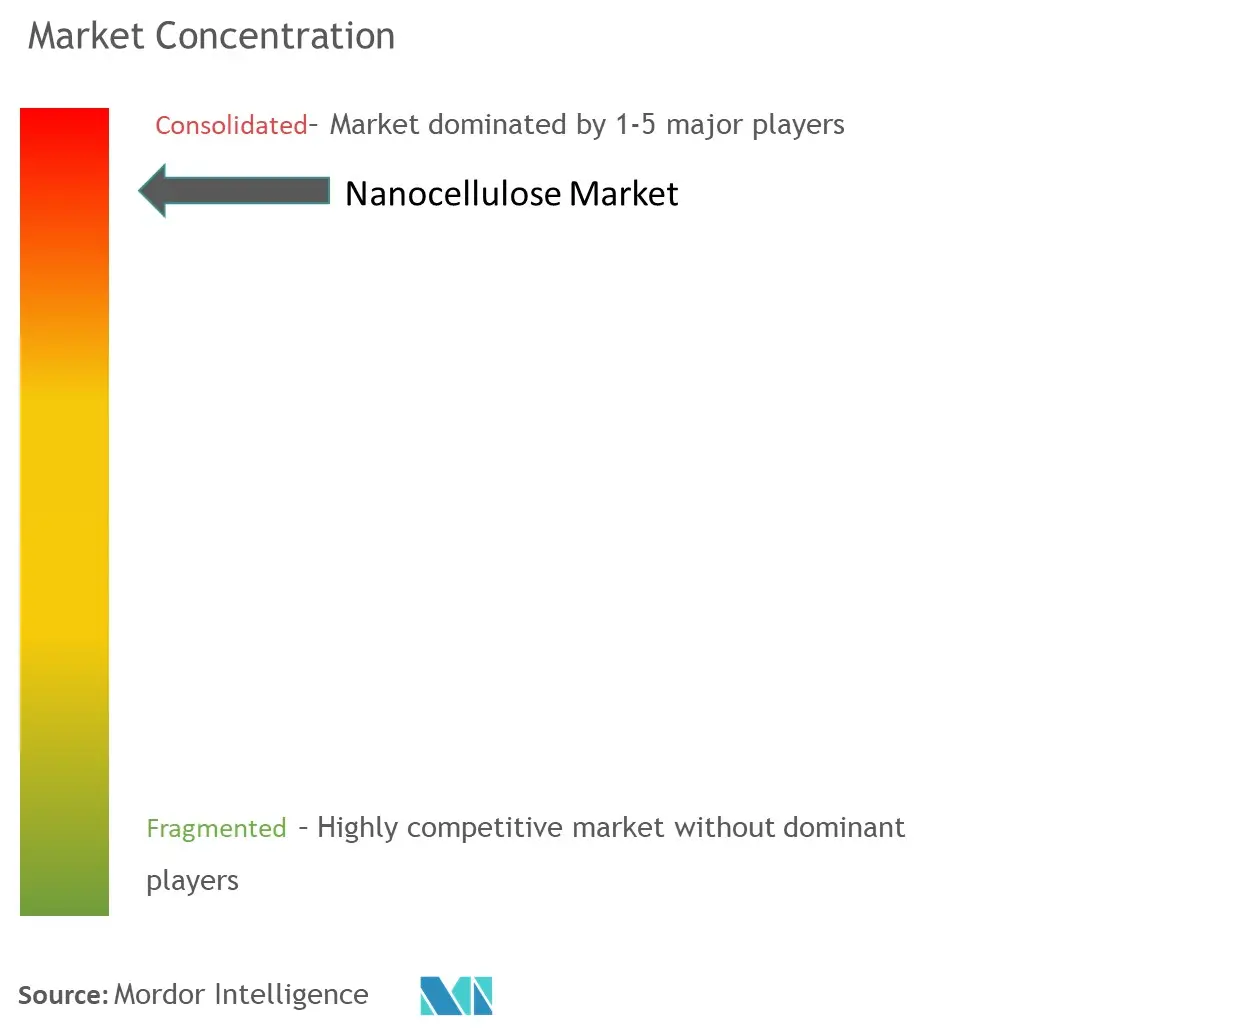 Nanocellulose Market Concentration